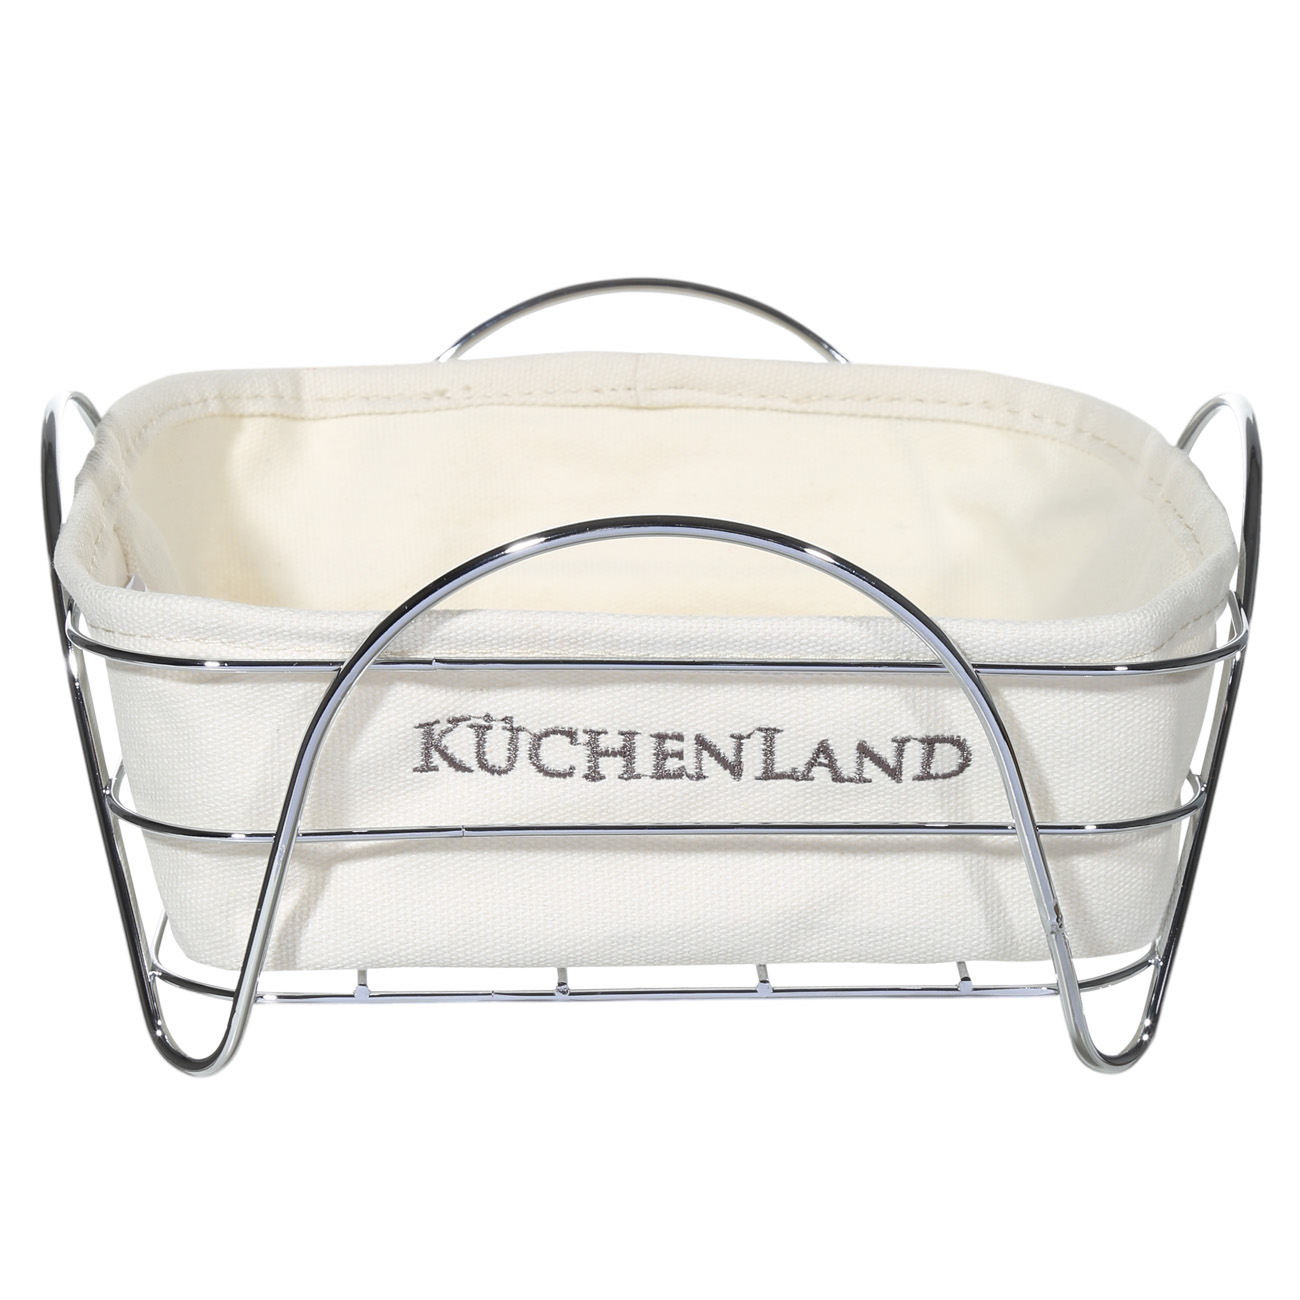 Kuchenland Корзина для хлеба, 21x21см, хлопок/сталь, квадратная, белая, Twist - фото 1